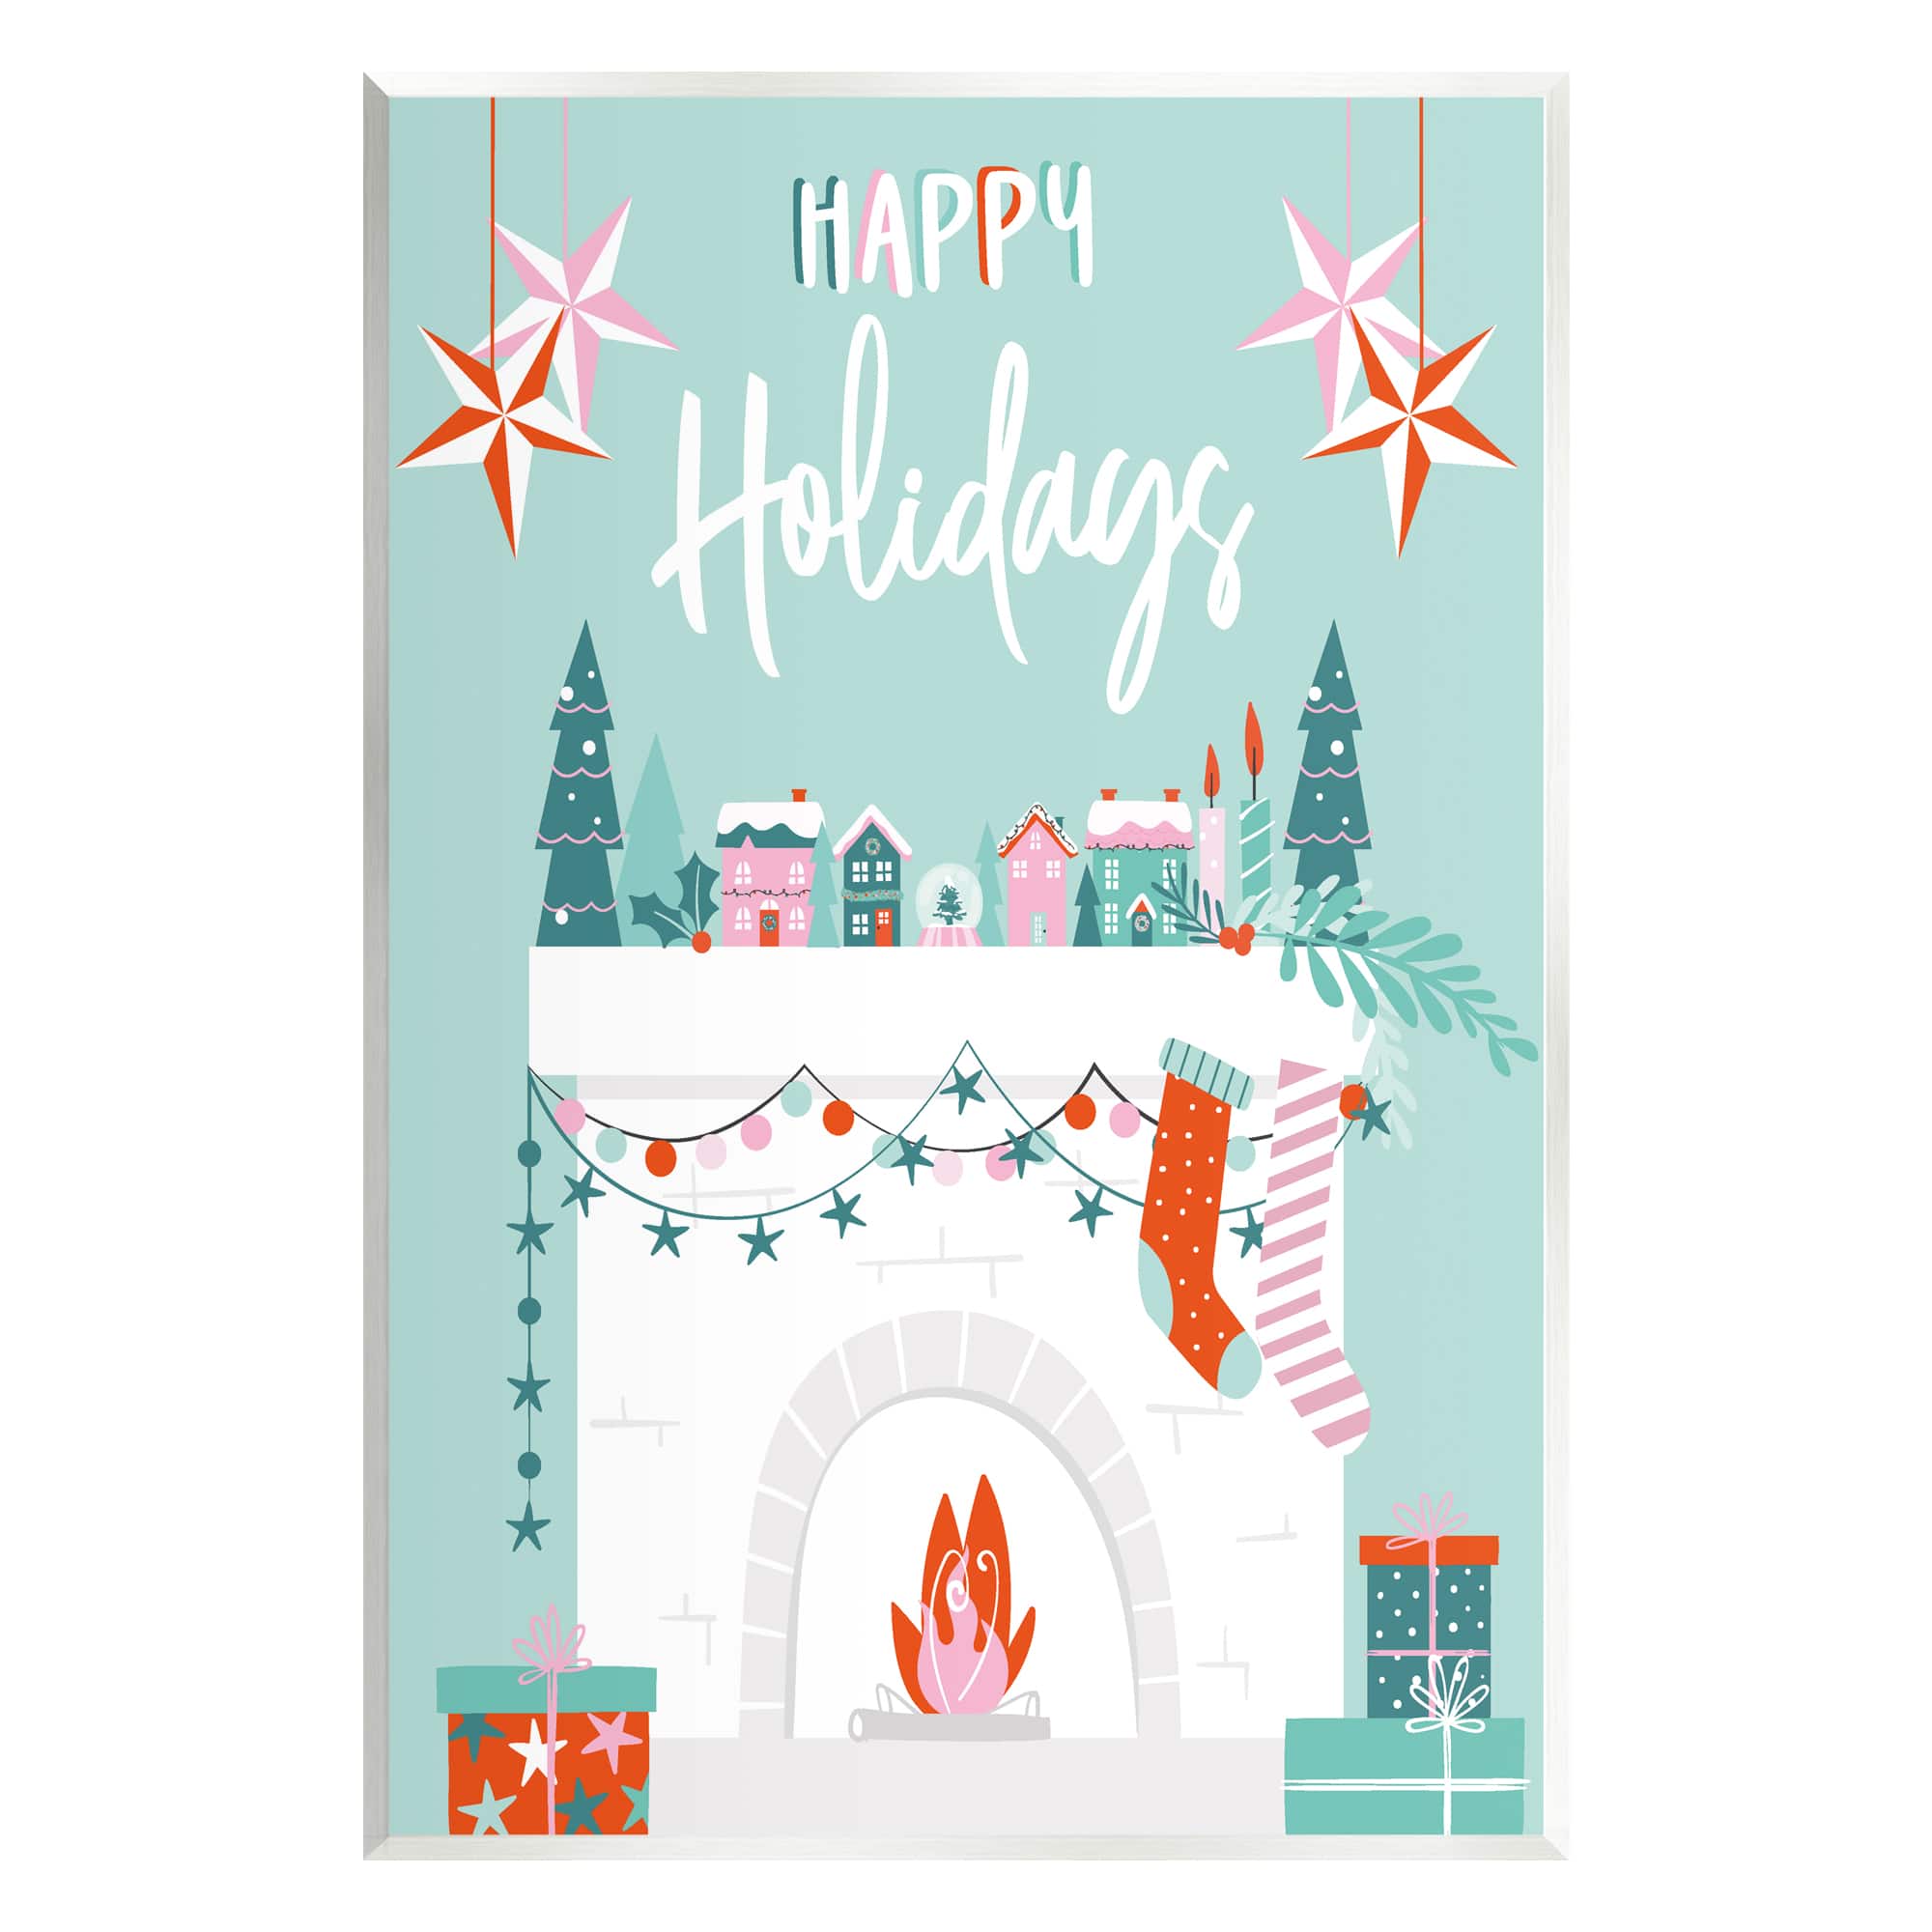 Stupell Industries Happy Holidays Festive Mantel Stockings Wall Plaque Art